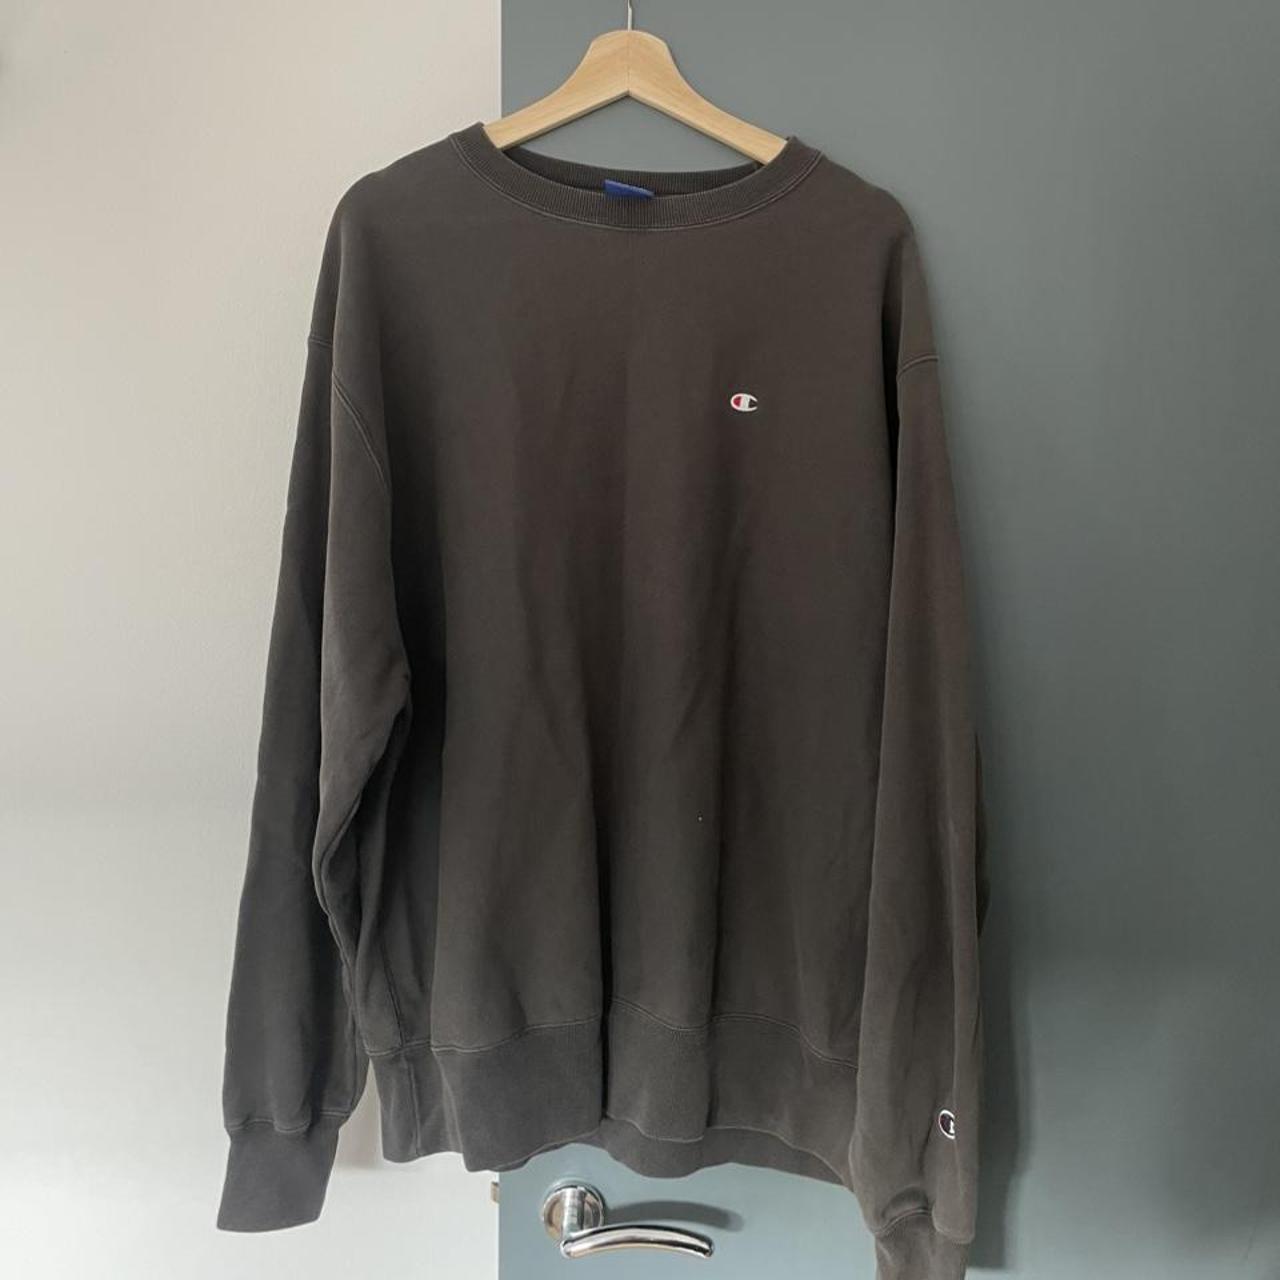 Vintage black Champion Sweater Size Large but... - Depop